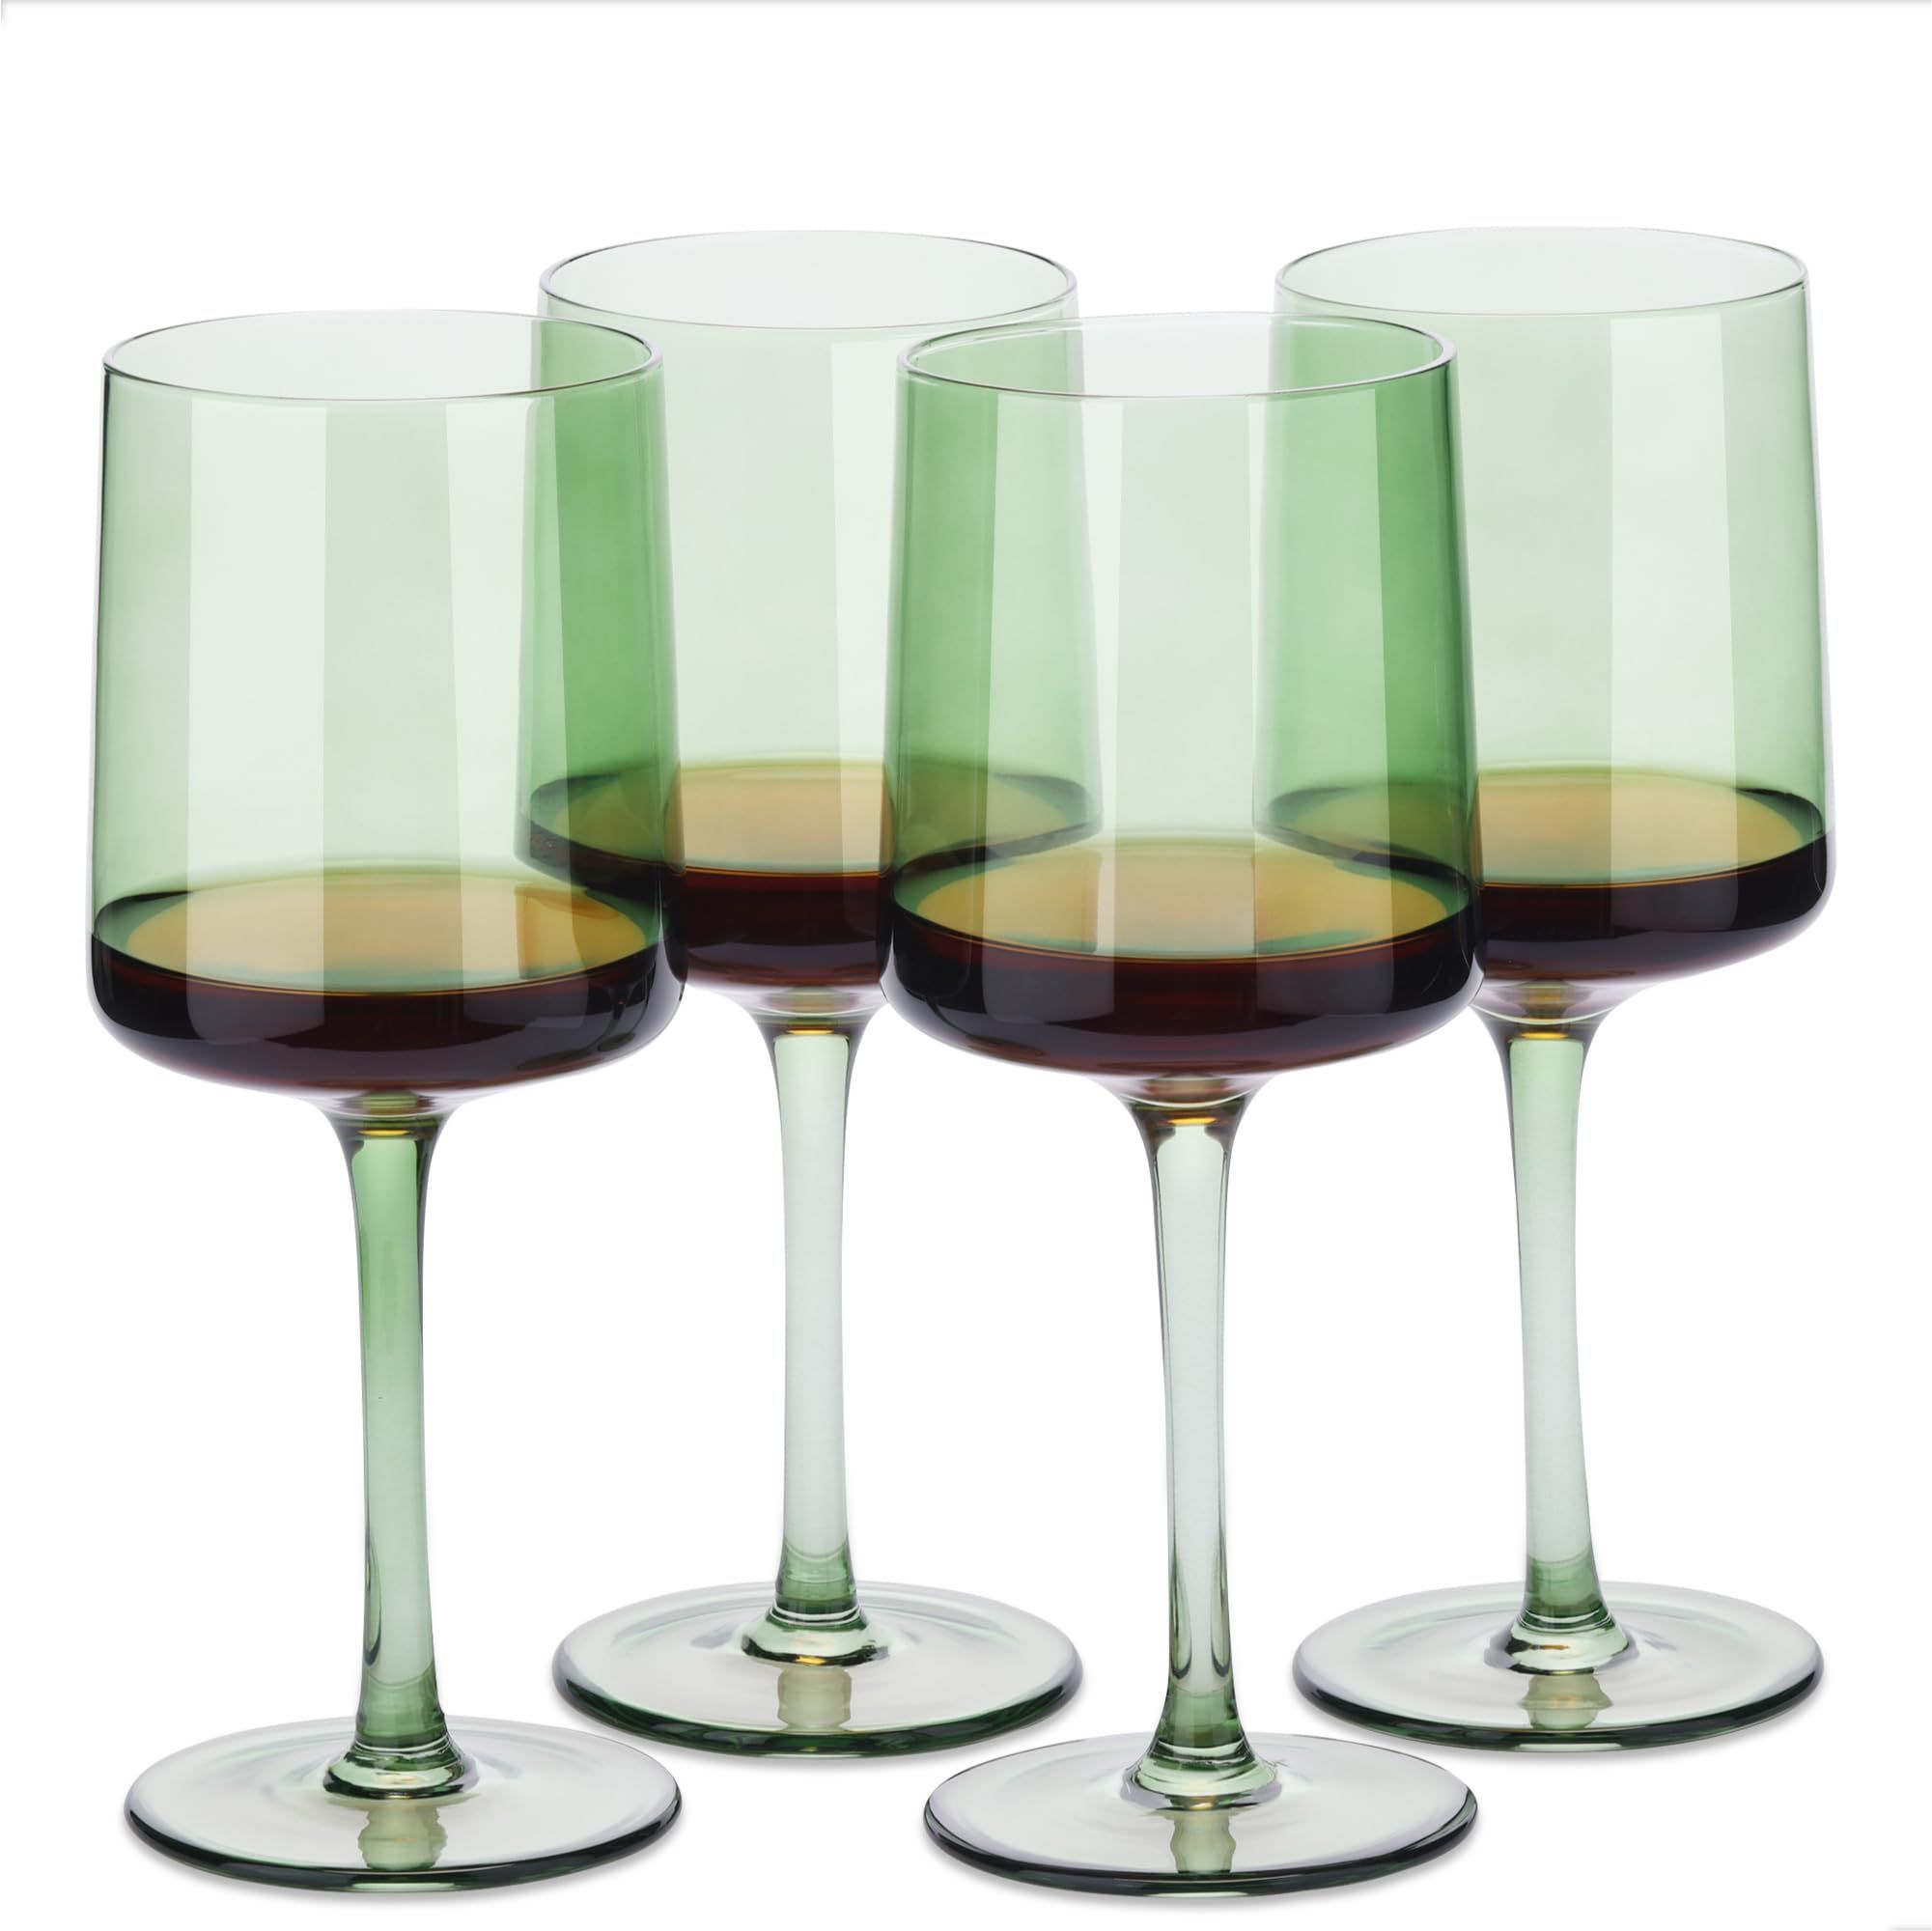 Navaris Mint Green Tinted Wine Glasses - Set of 4 - Coloured Wine Glasses with Stems - Stylish Desig | Amazon (US)